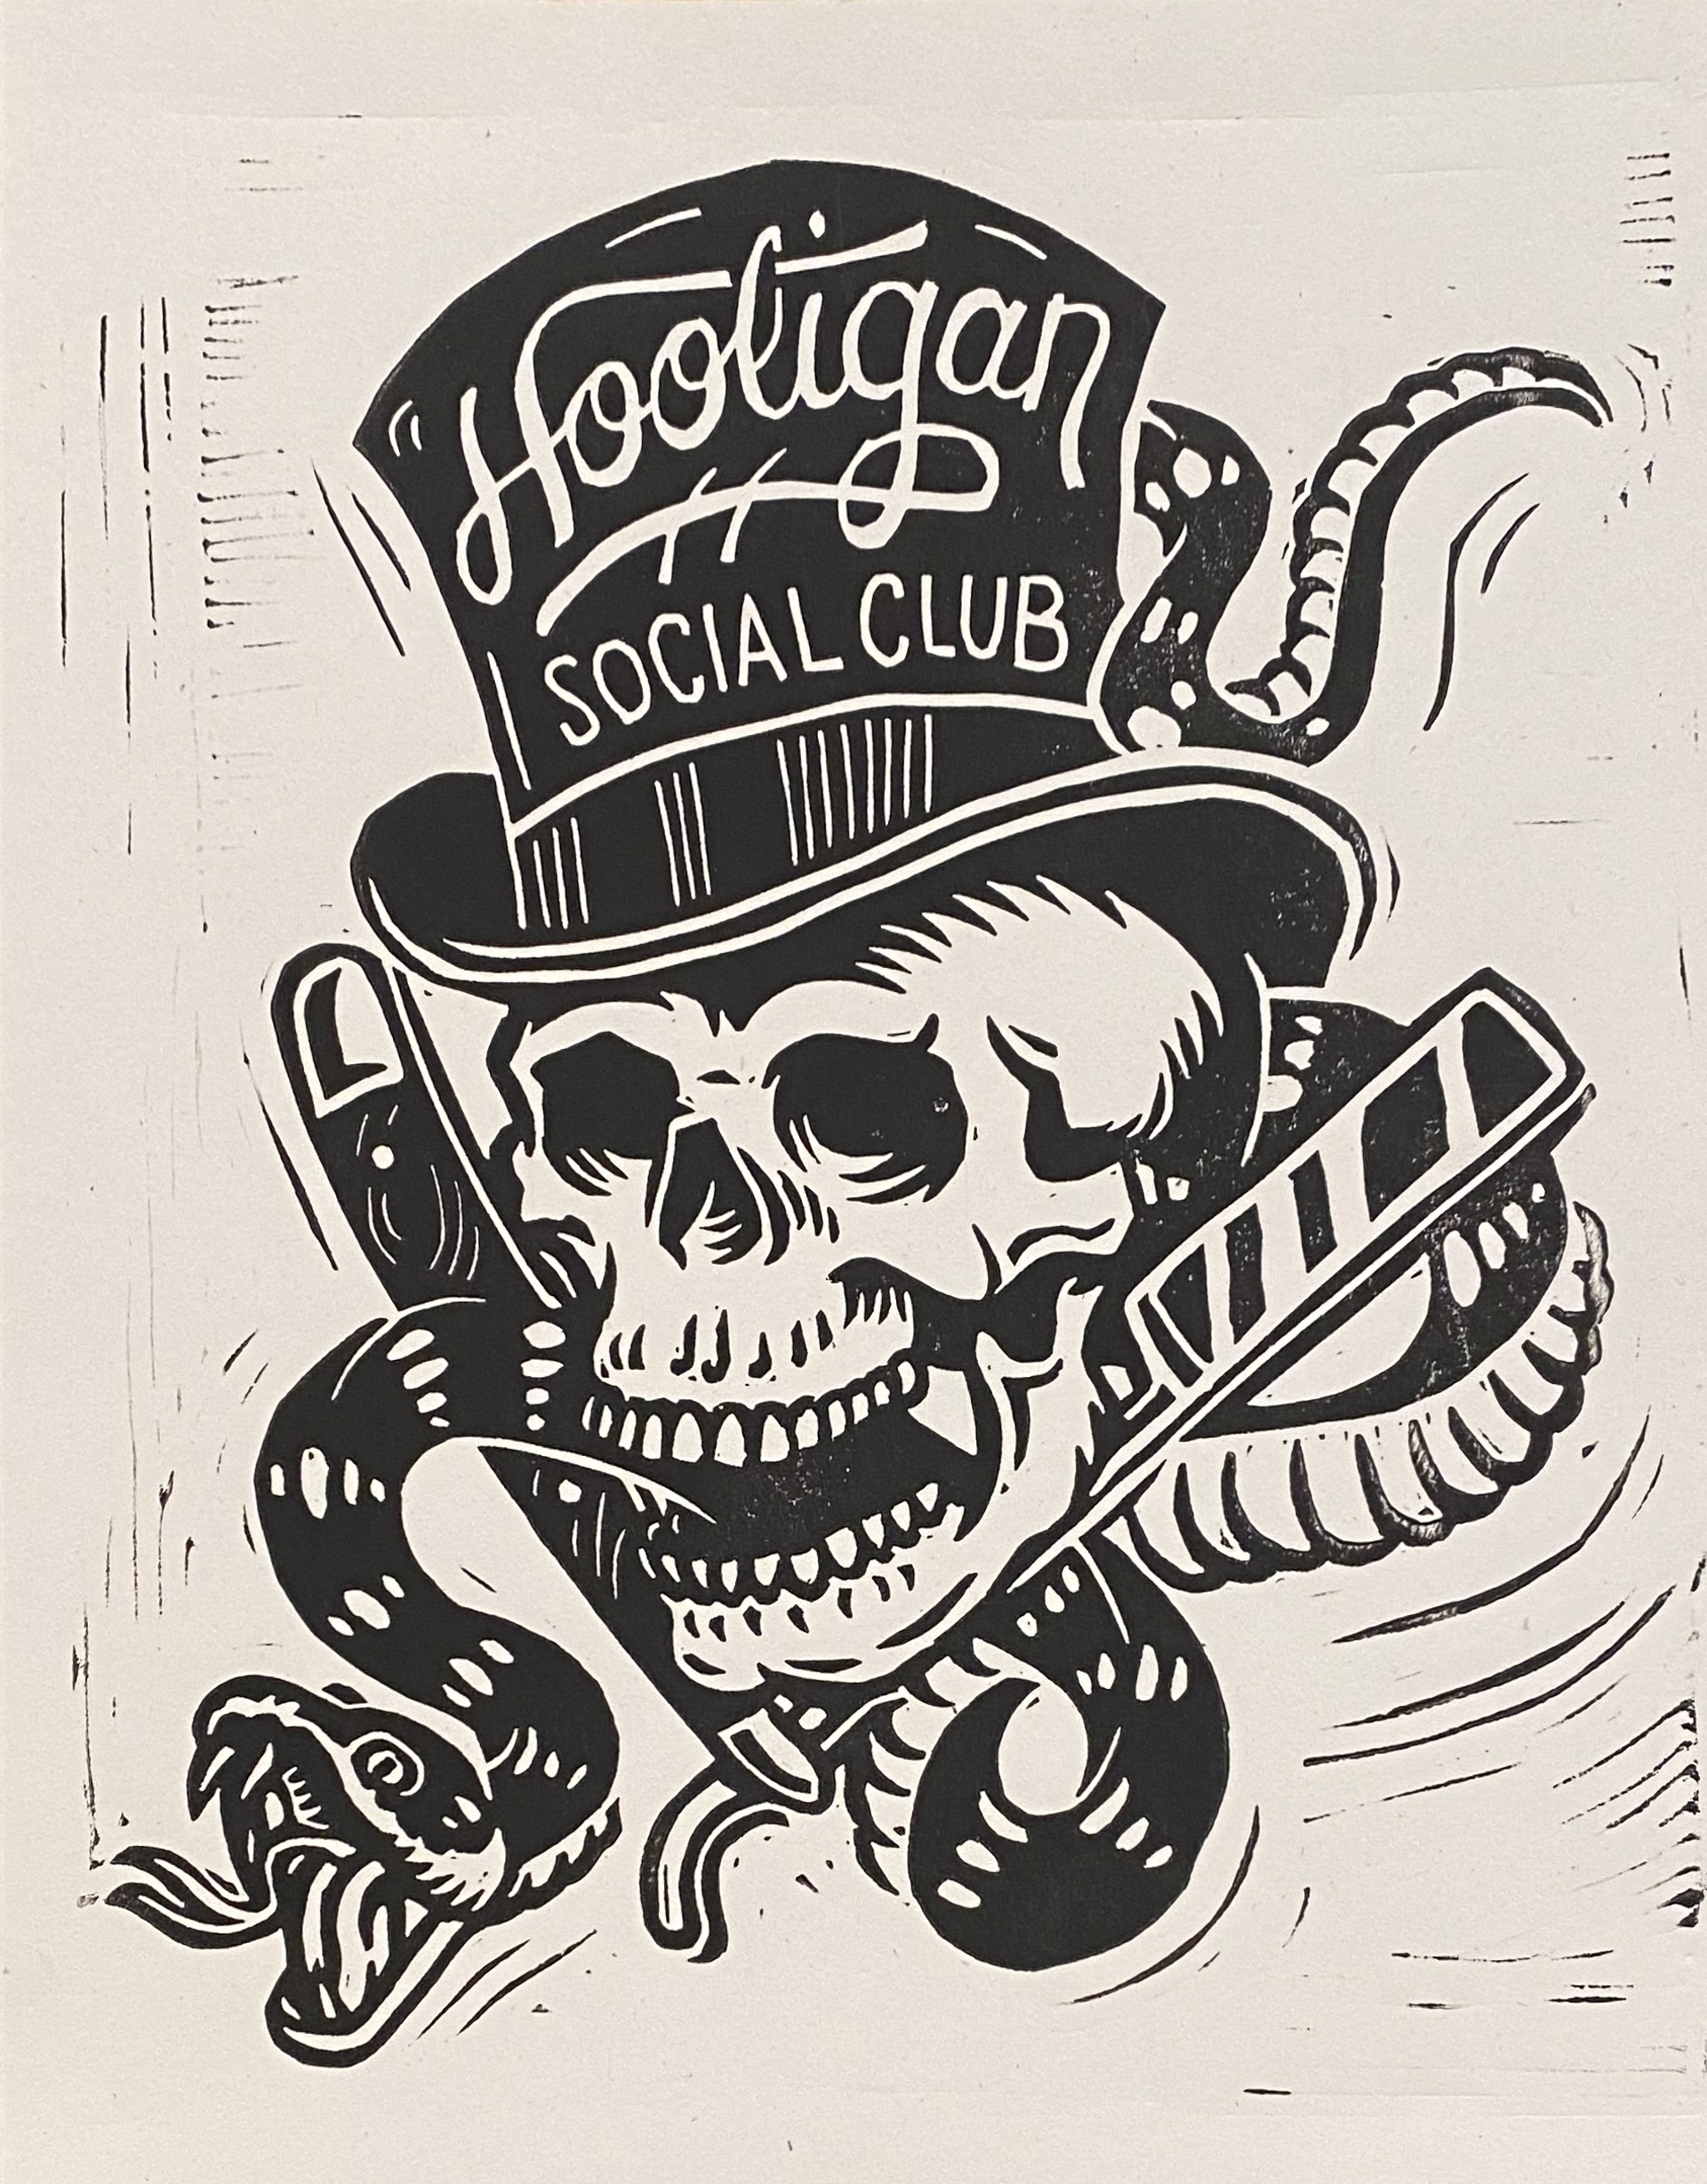 Hooligan Social Club by Derrick Castle